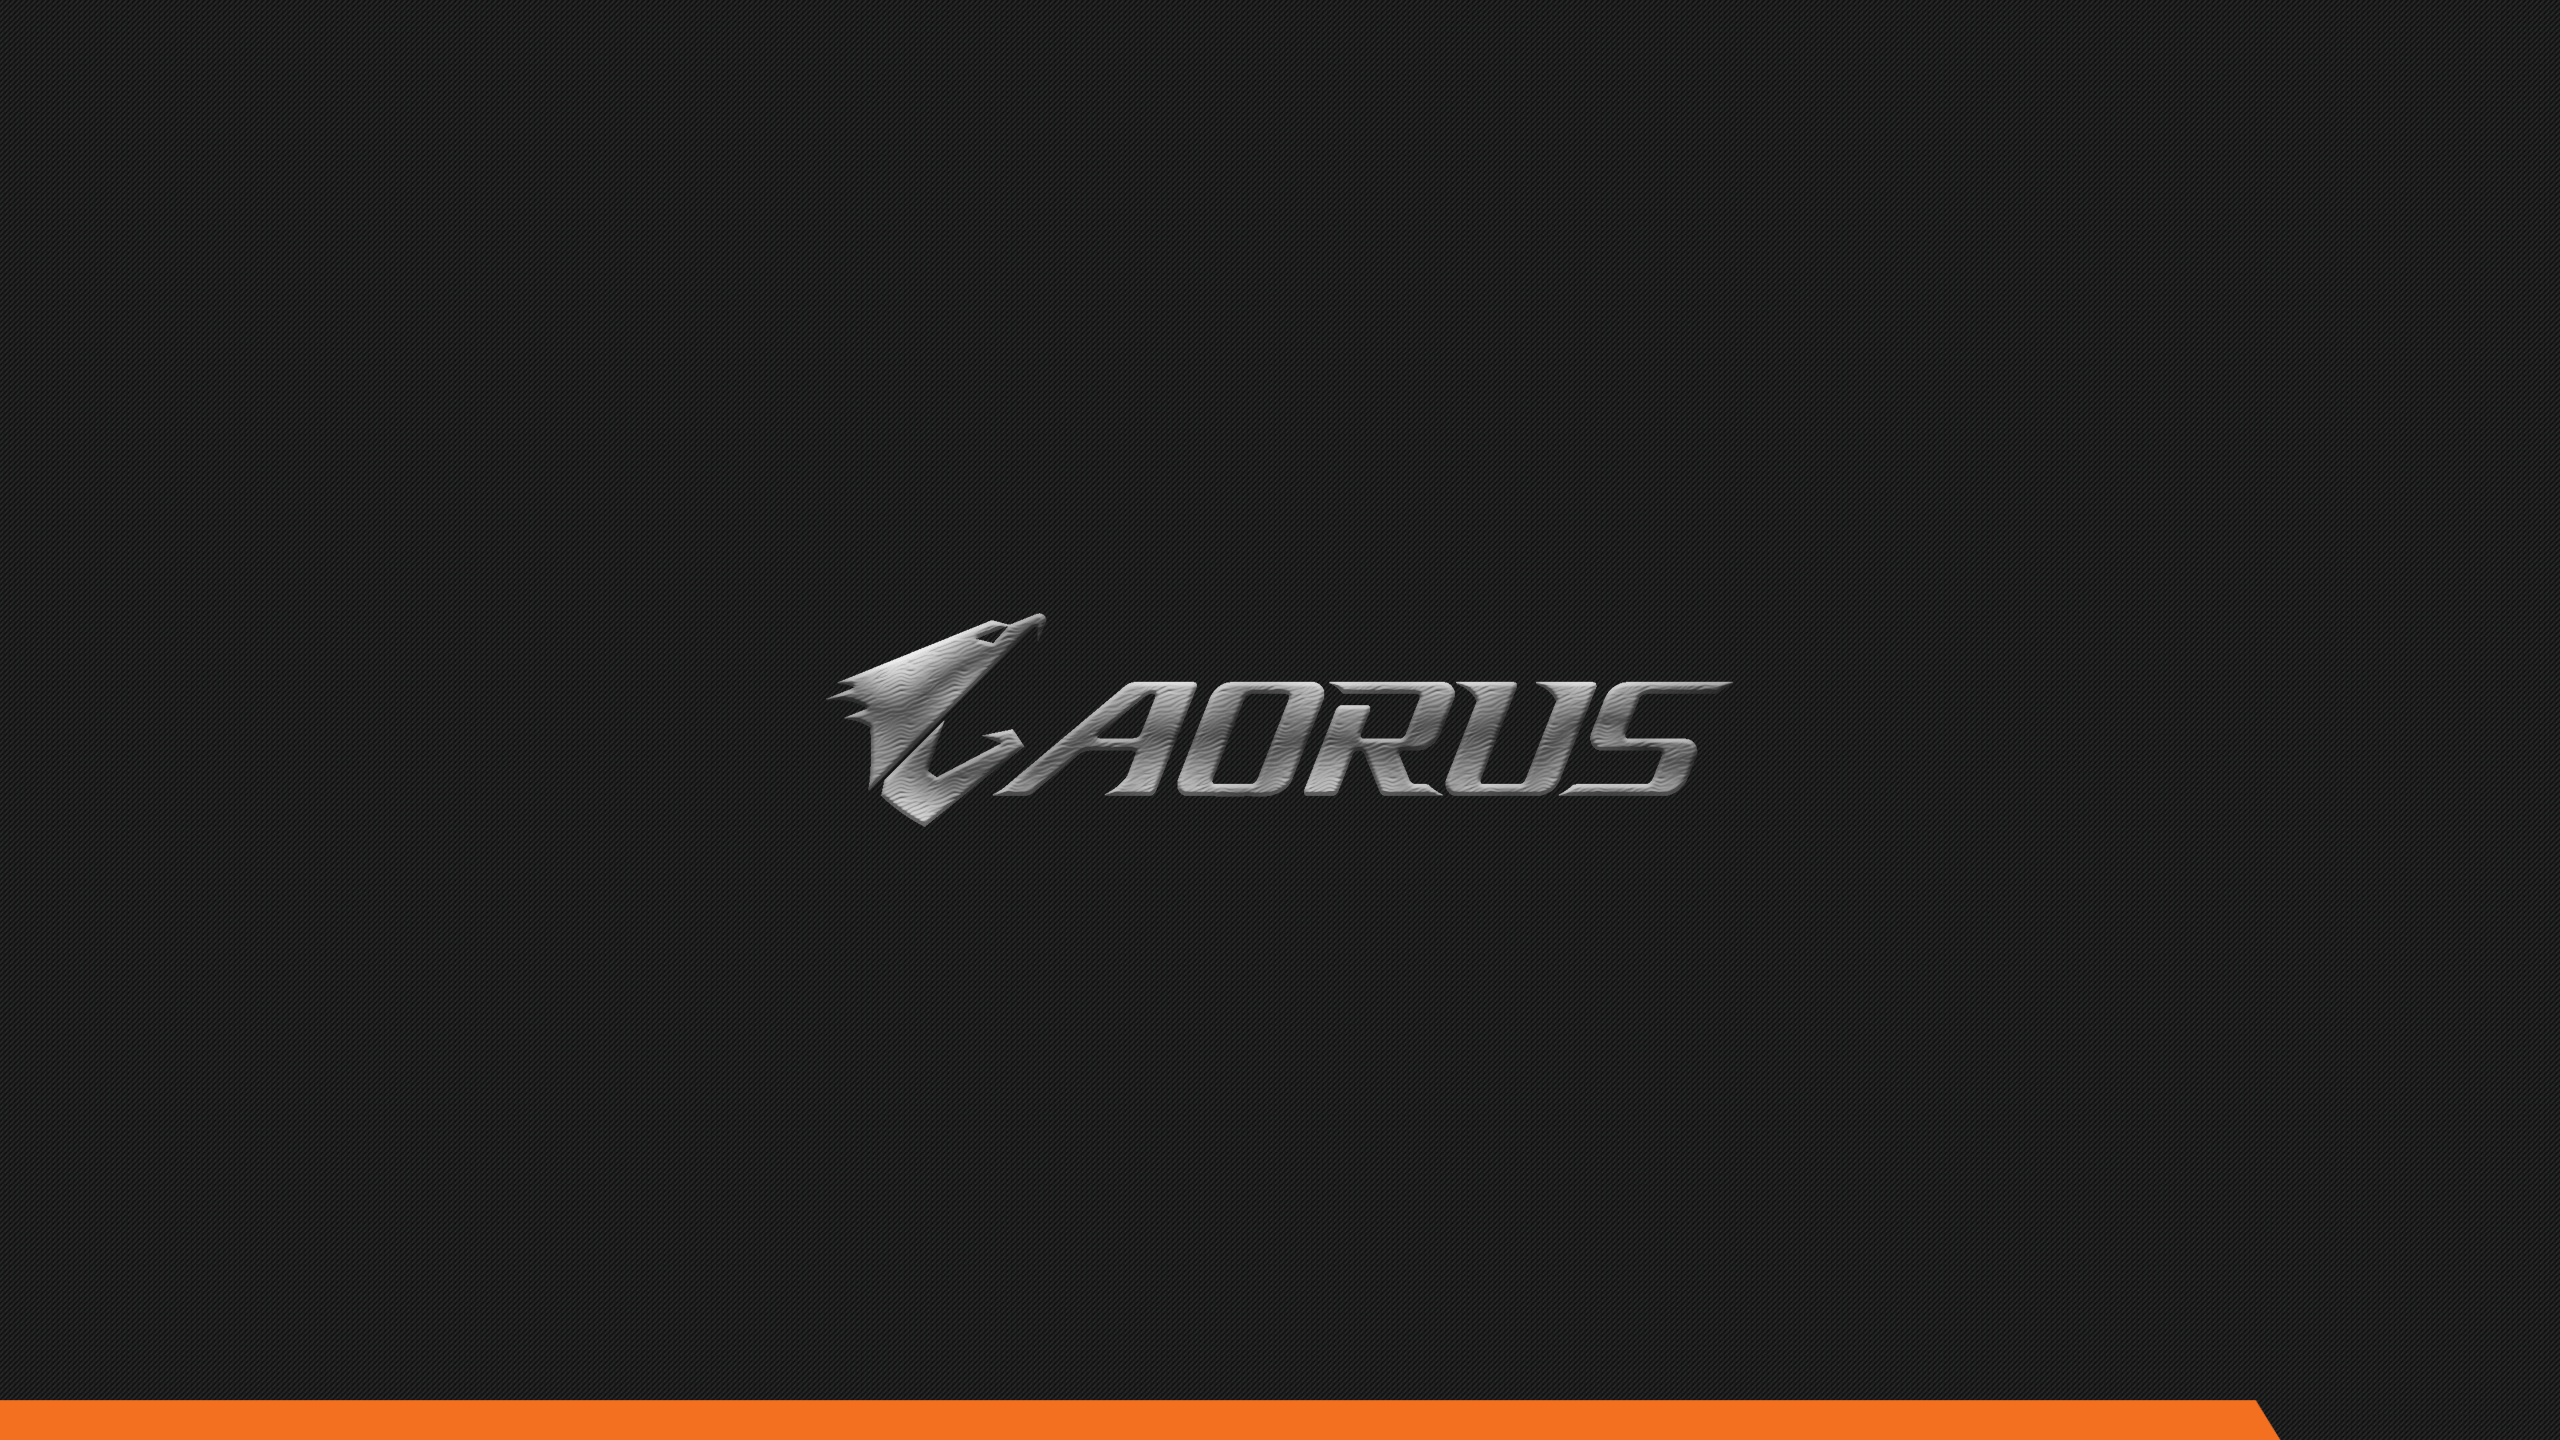 Wallpaper ID 103195  Gigabyte Aorus logo PC gaming technology simple  background black dark black background orange free download